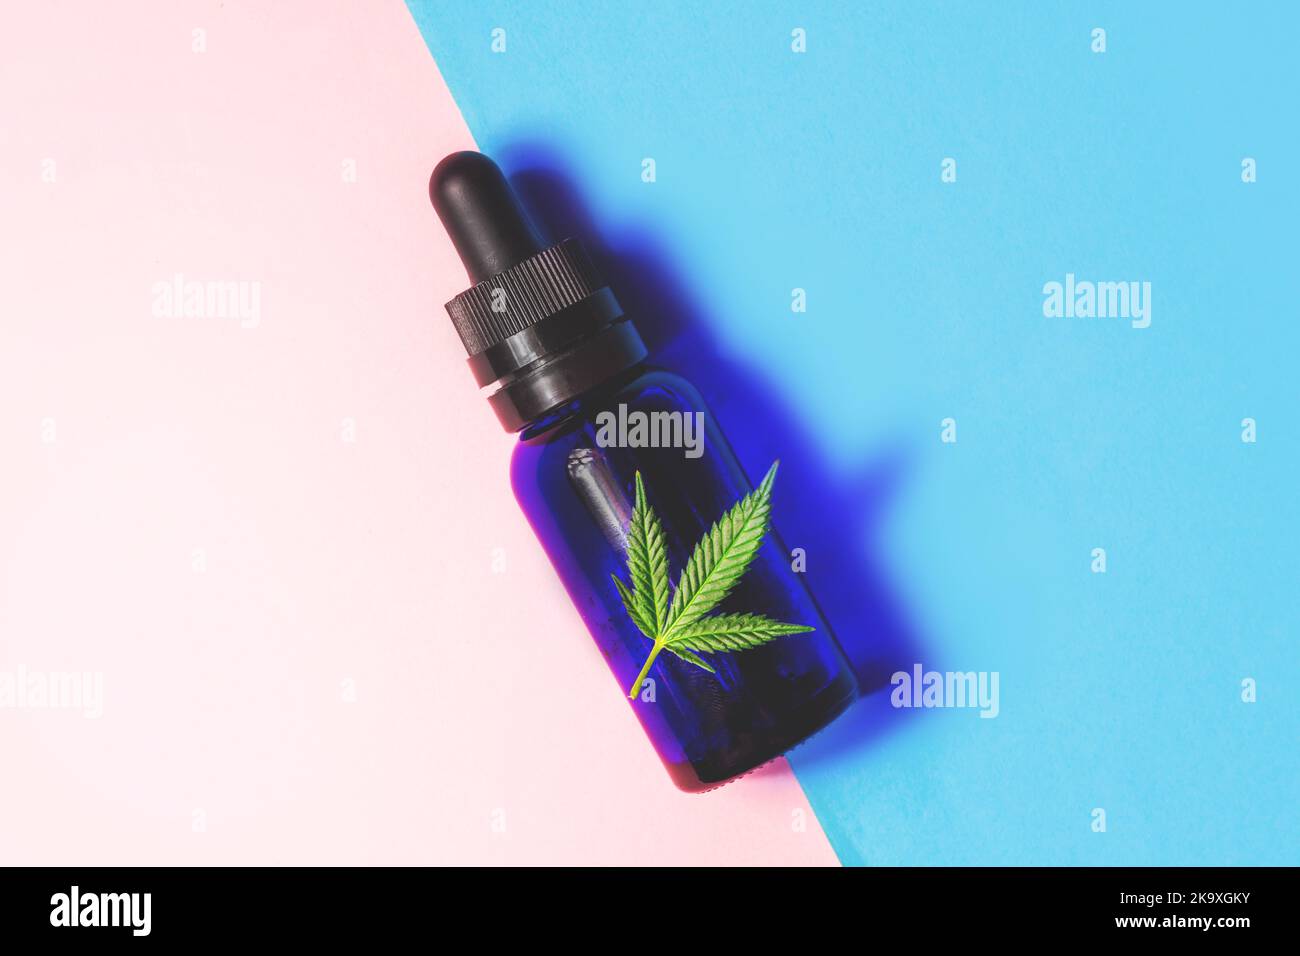 Eyedropper bottle with Cannabis CBD oil and Marijuana leaf on Pink Blue background Stock Photo